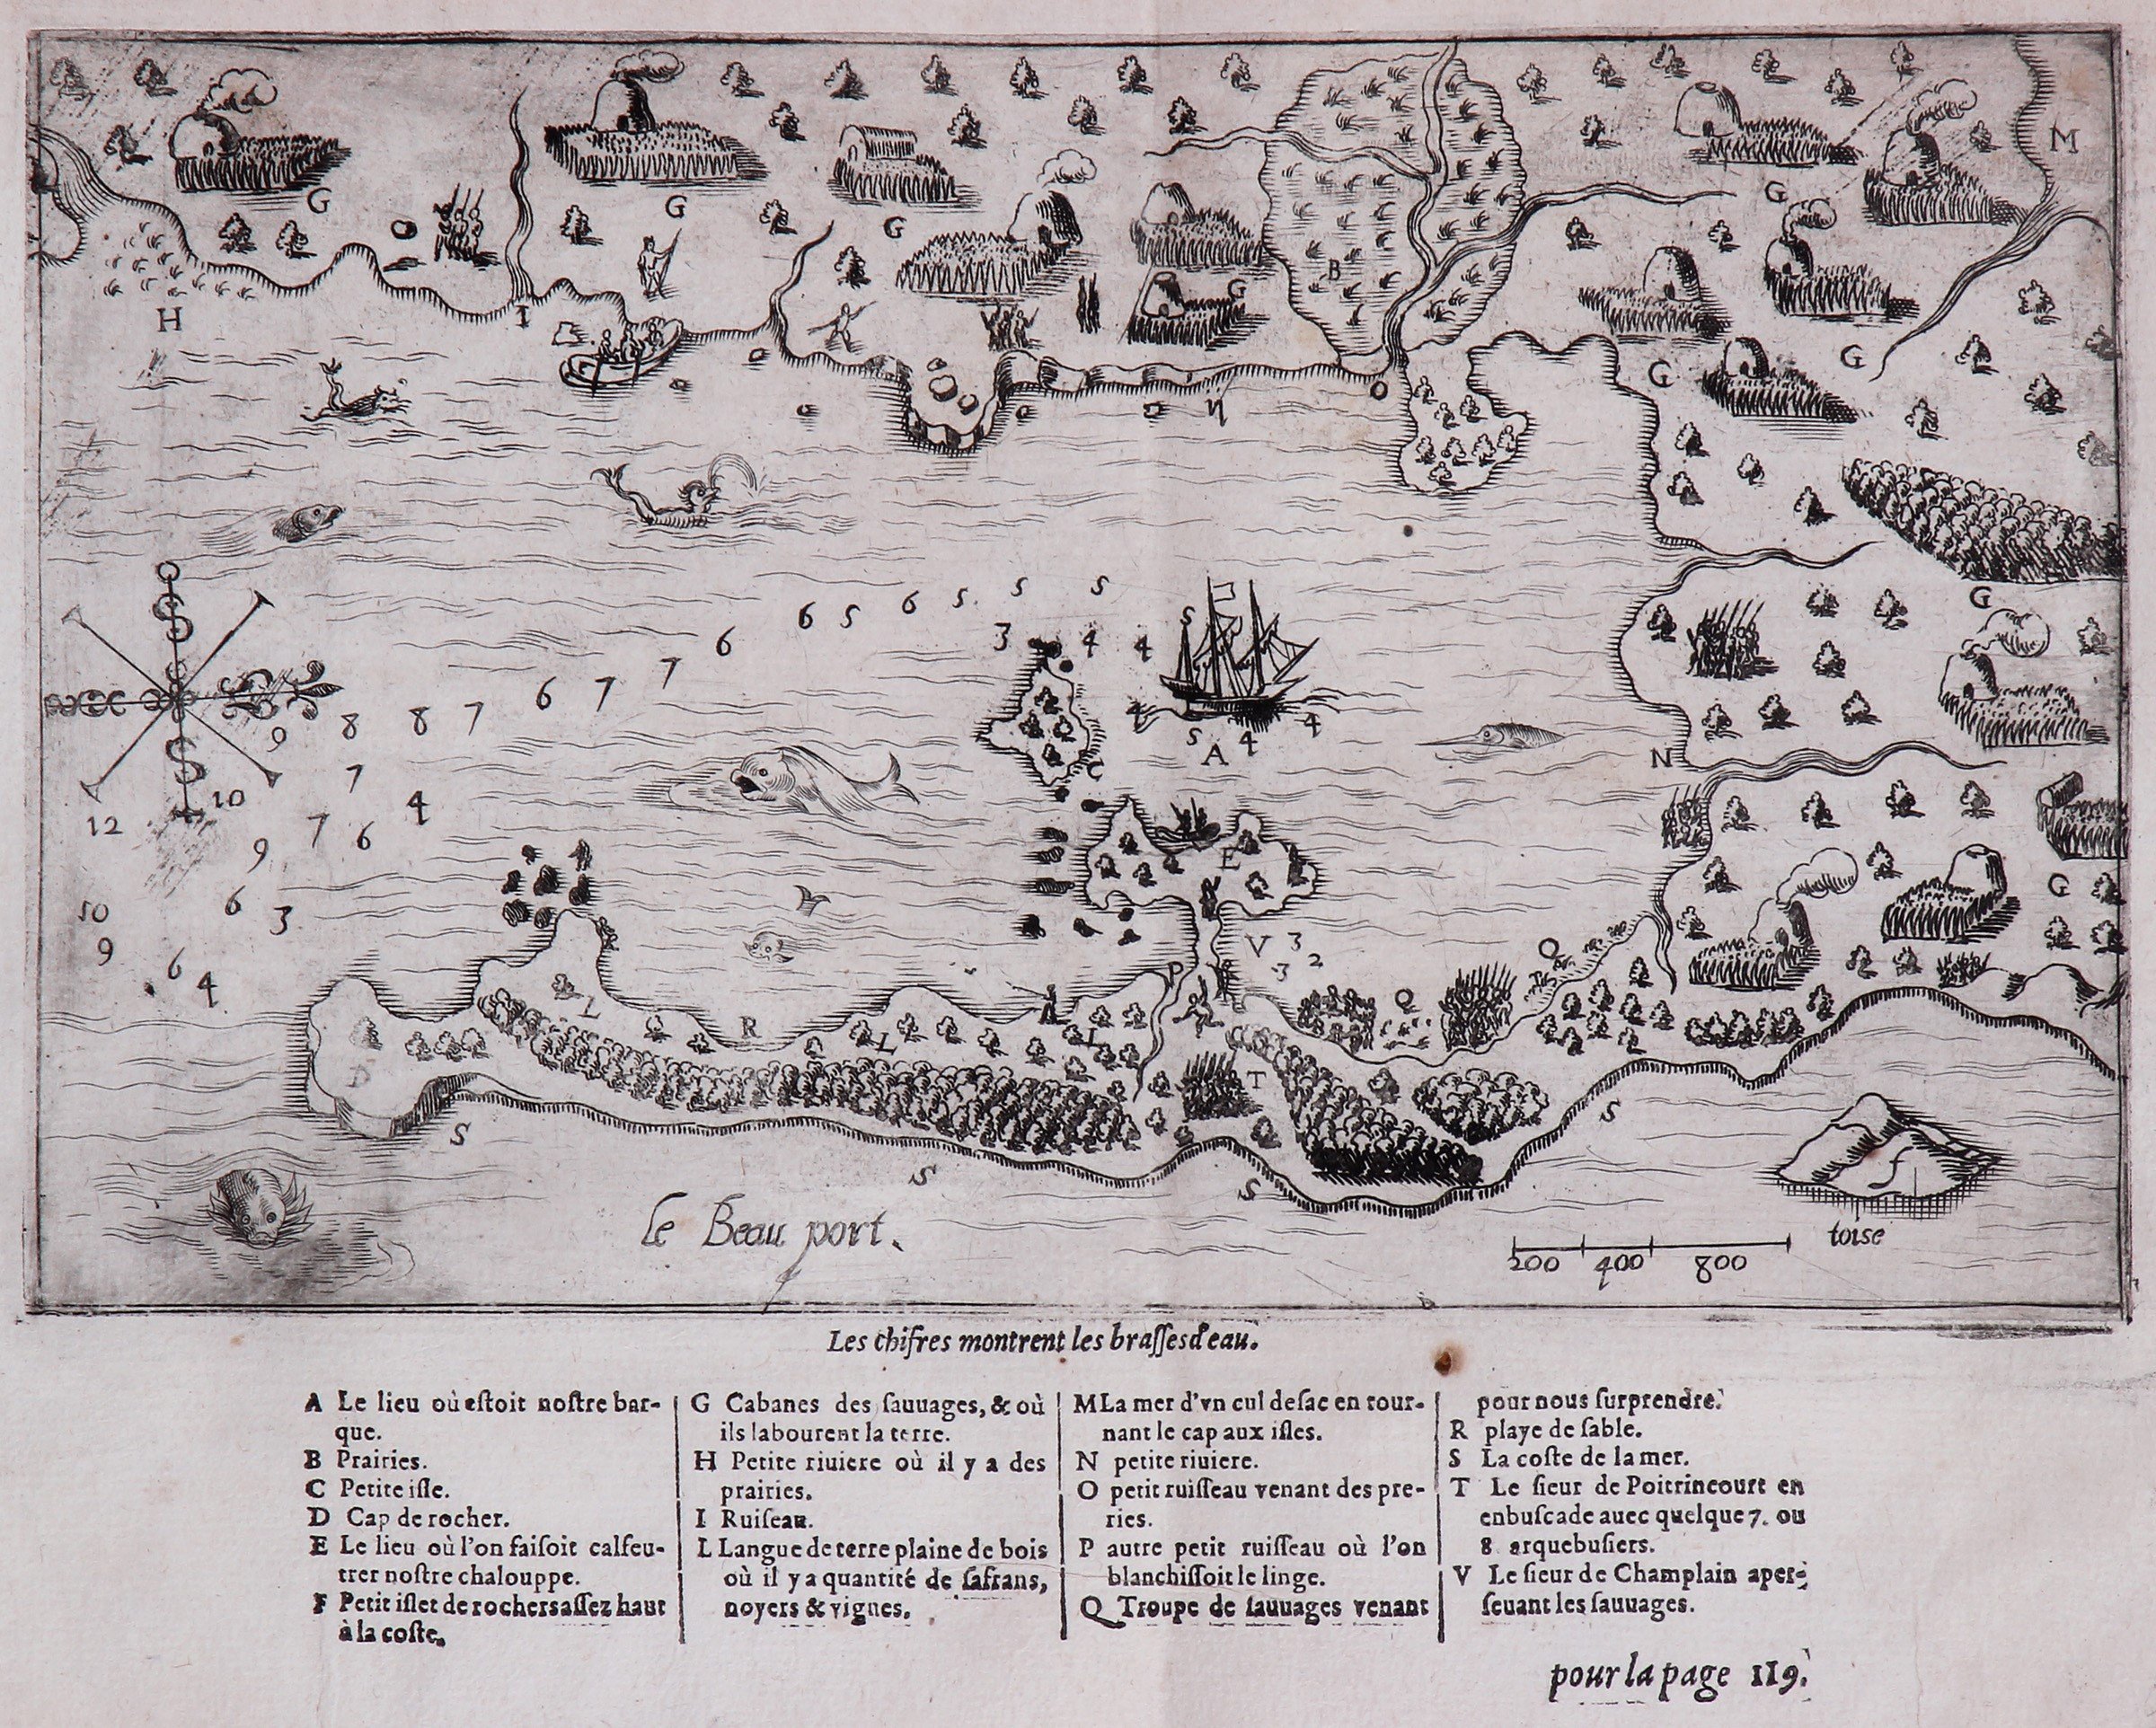 Printed map of Cape Ann, Le Beau Port, 1613